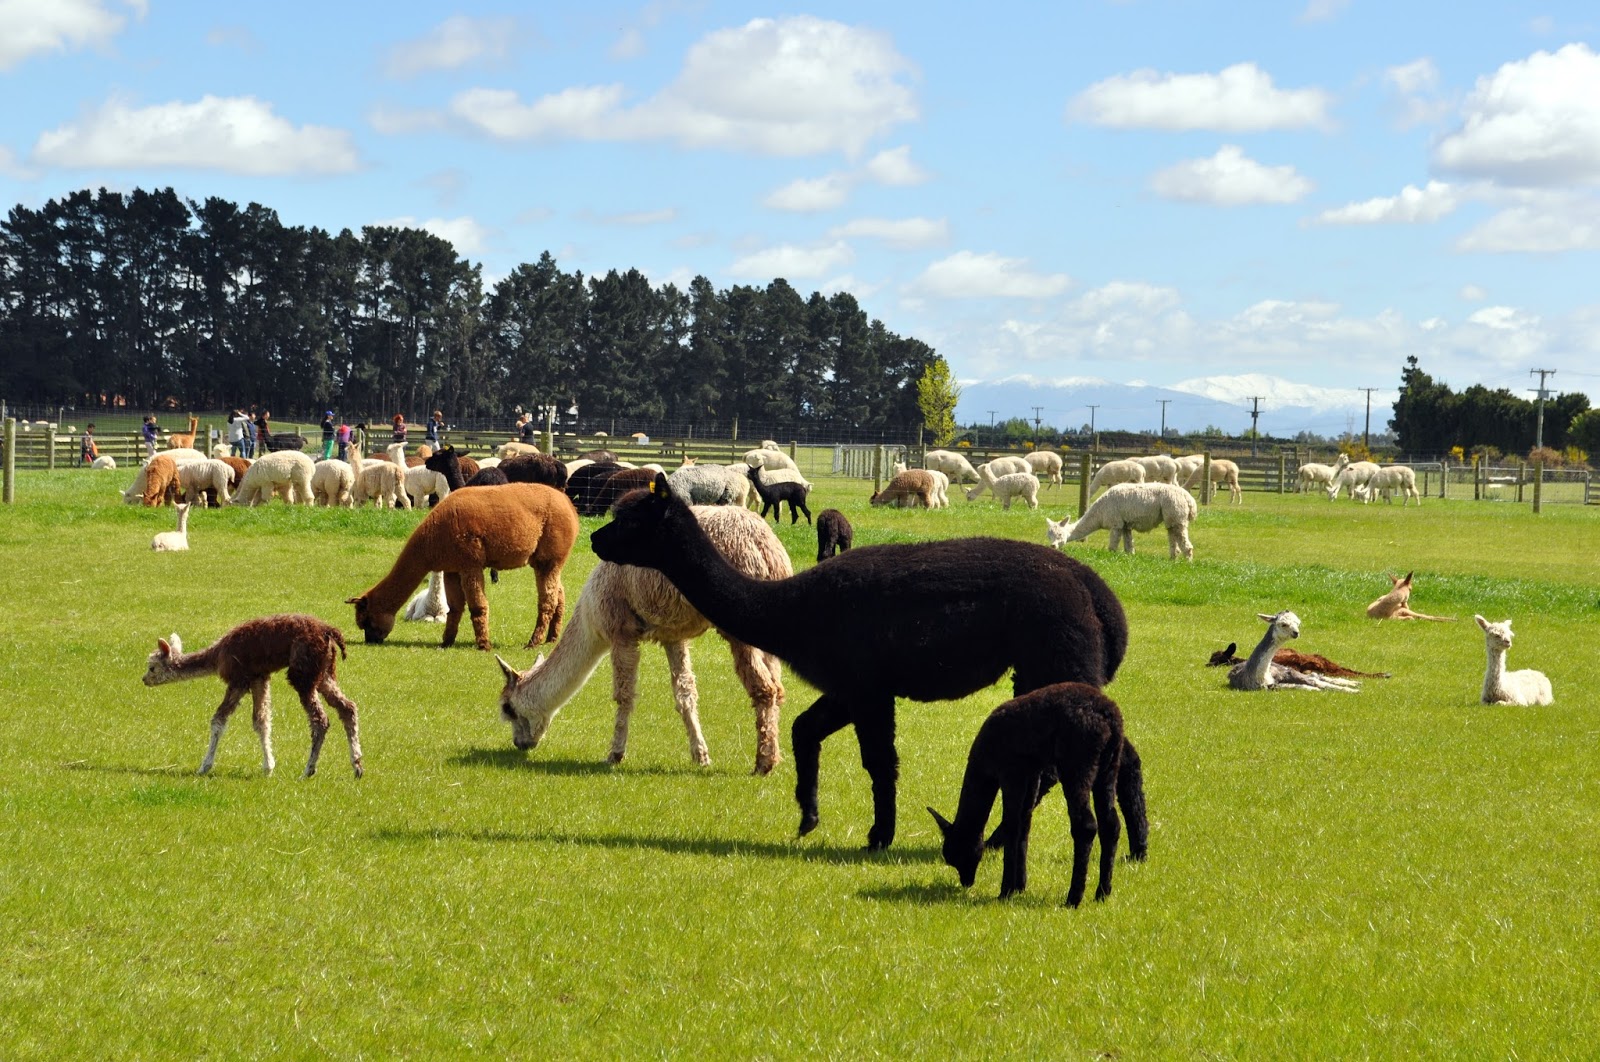 alpaca farm planning permission